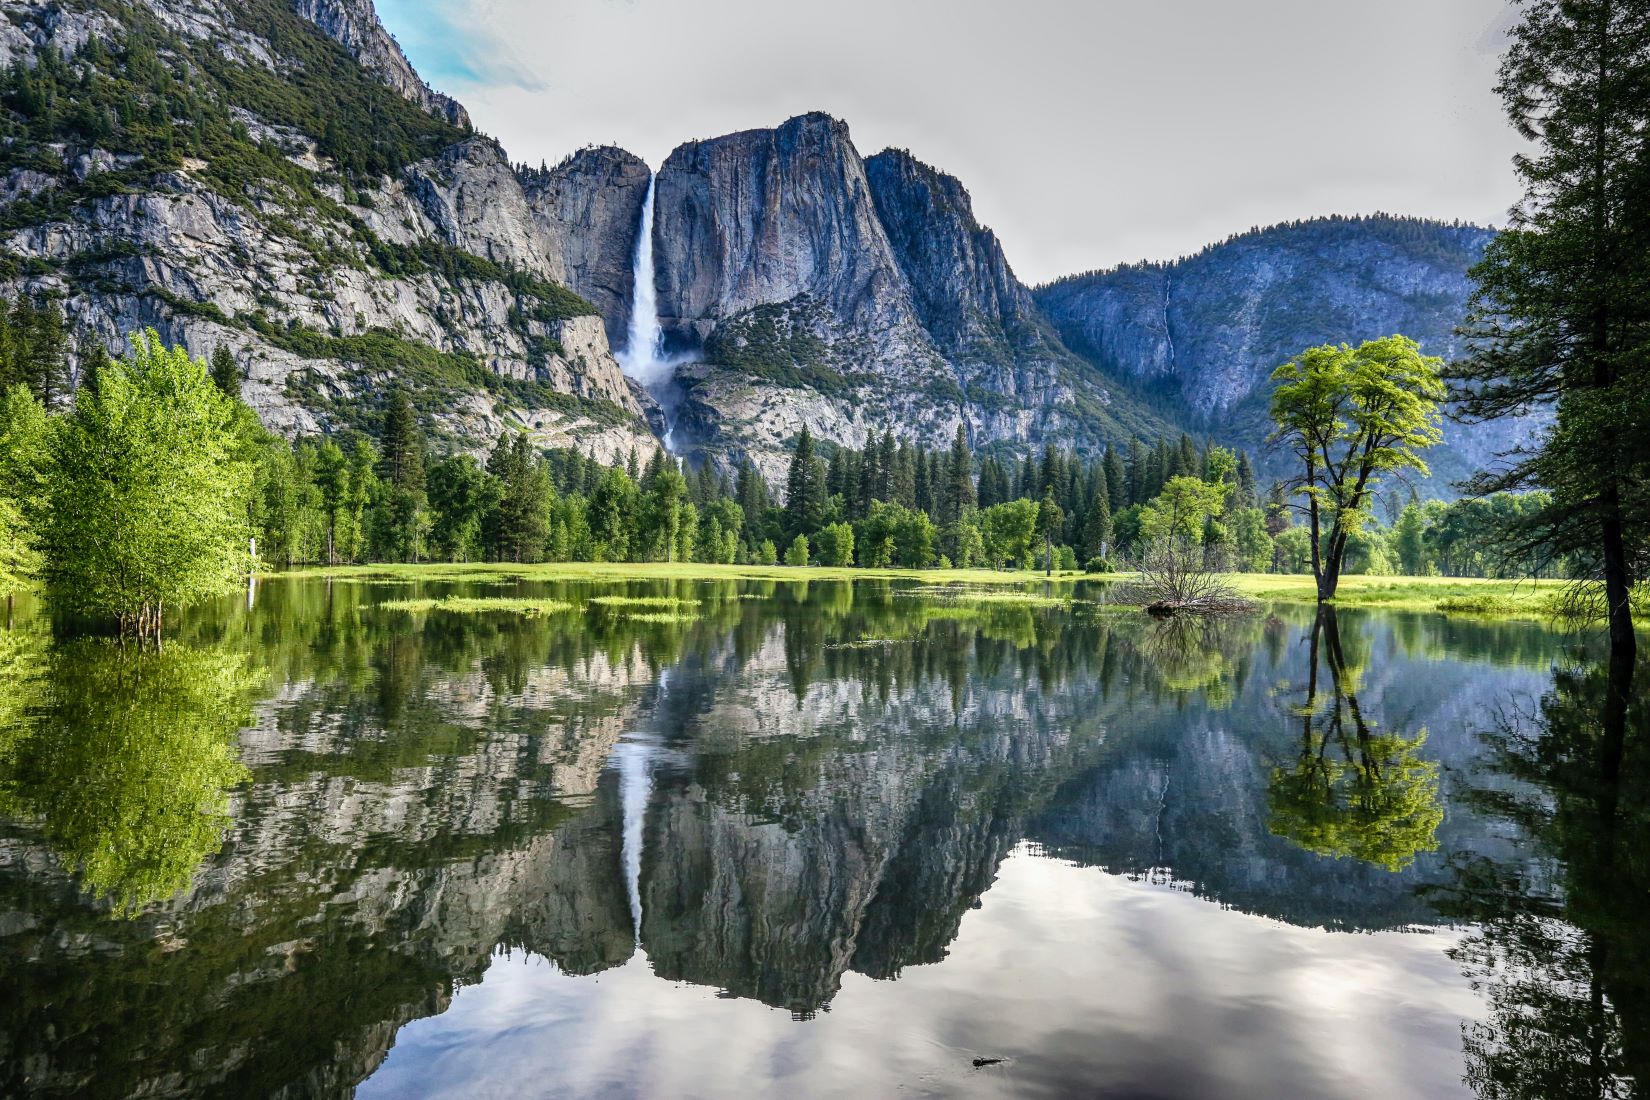 An image of Yosemite National Park.